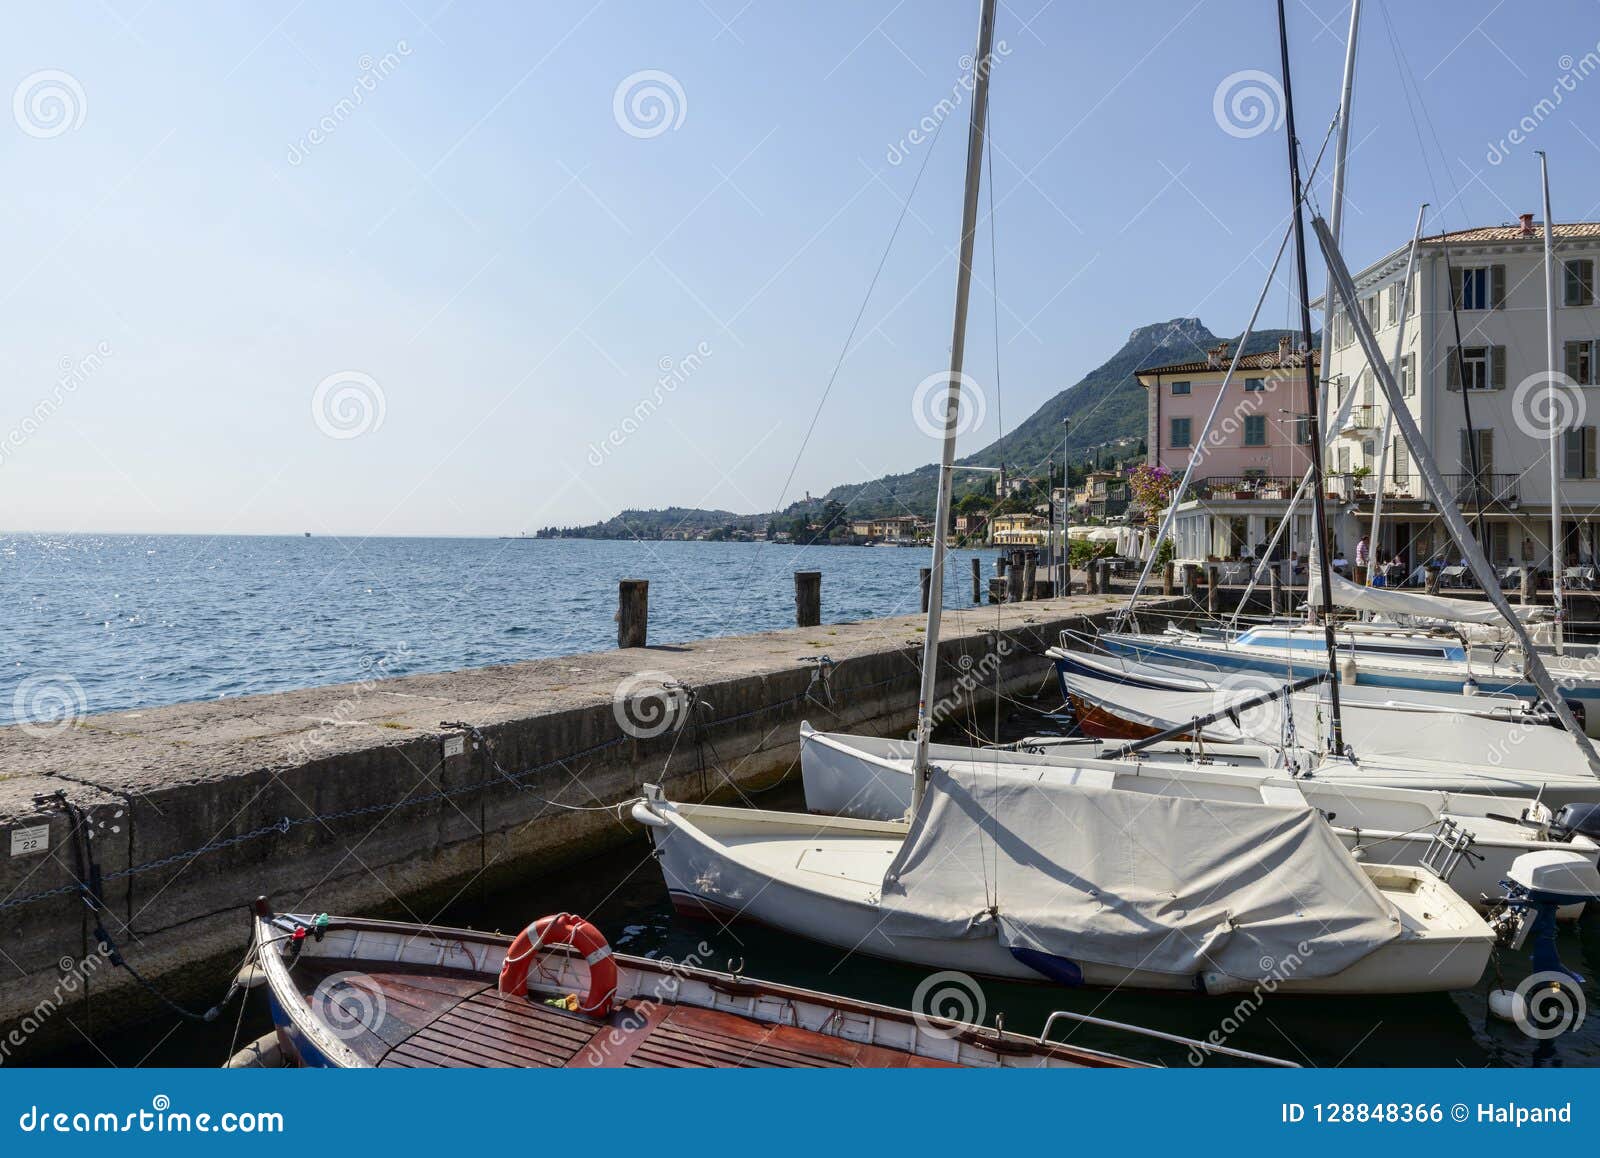 leisure harbor on garda lake, gargnano, italy